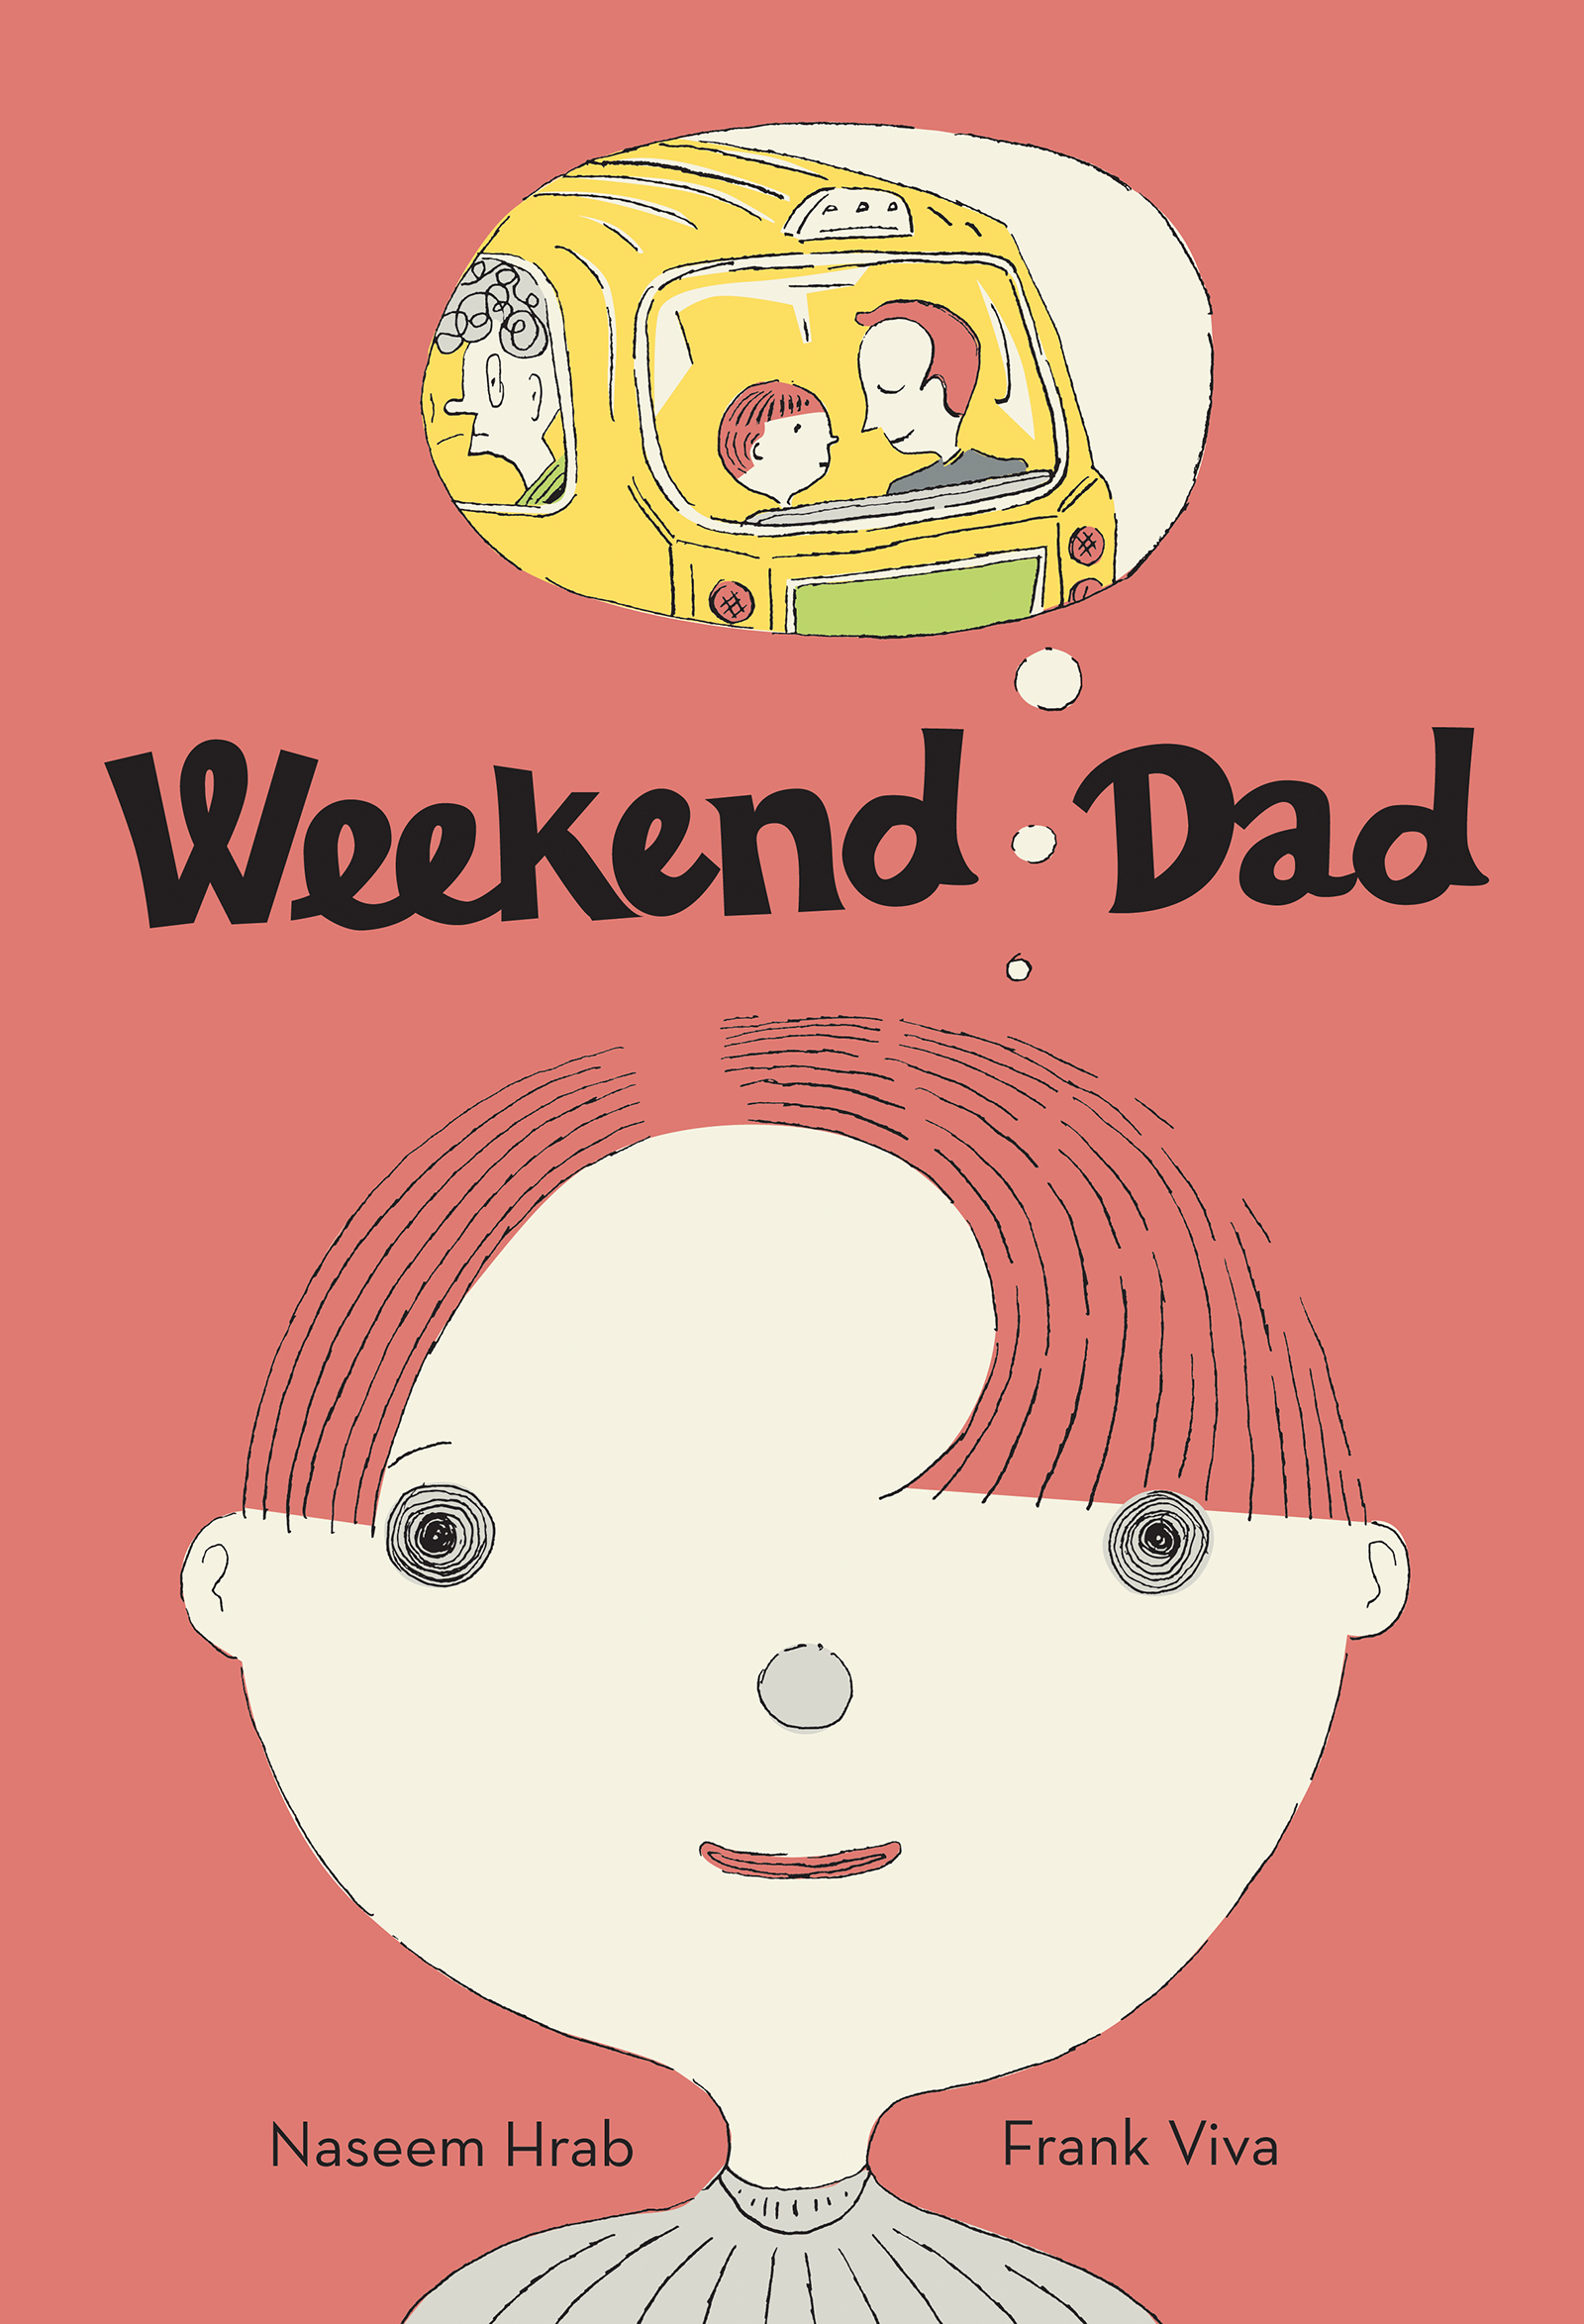 Weekend Dad by Naseem Hrab book cover